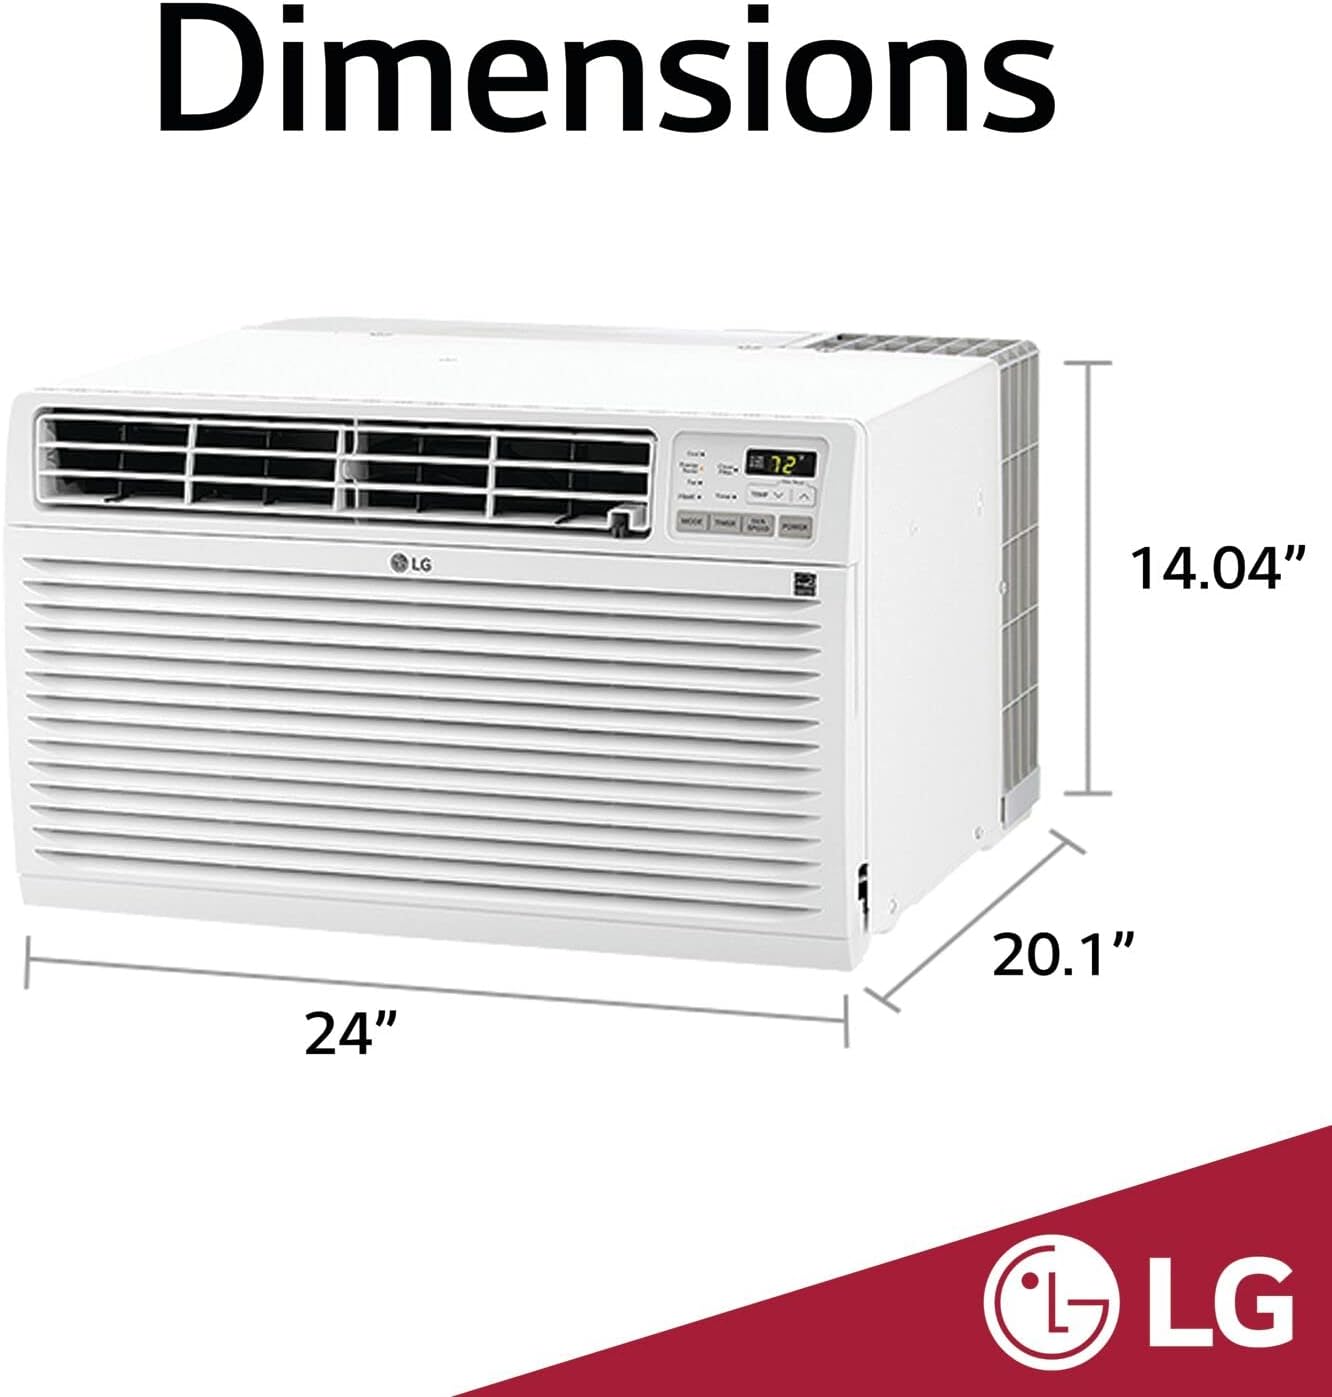 LG 11,200 BTU Through-the-Wall Air Conditioner, Cools 550 Sq.Ft. - $360